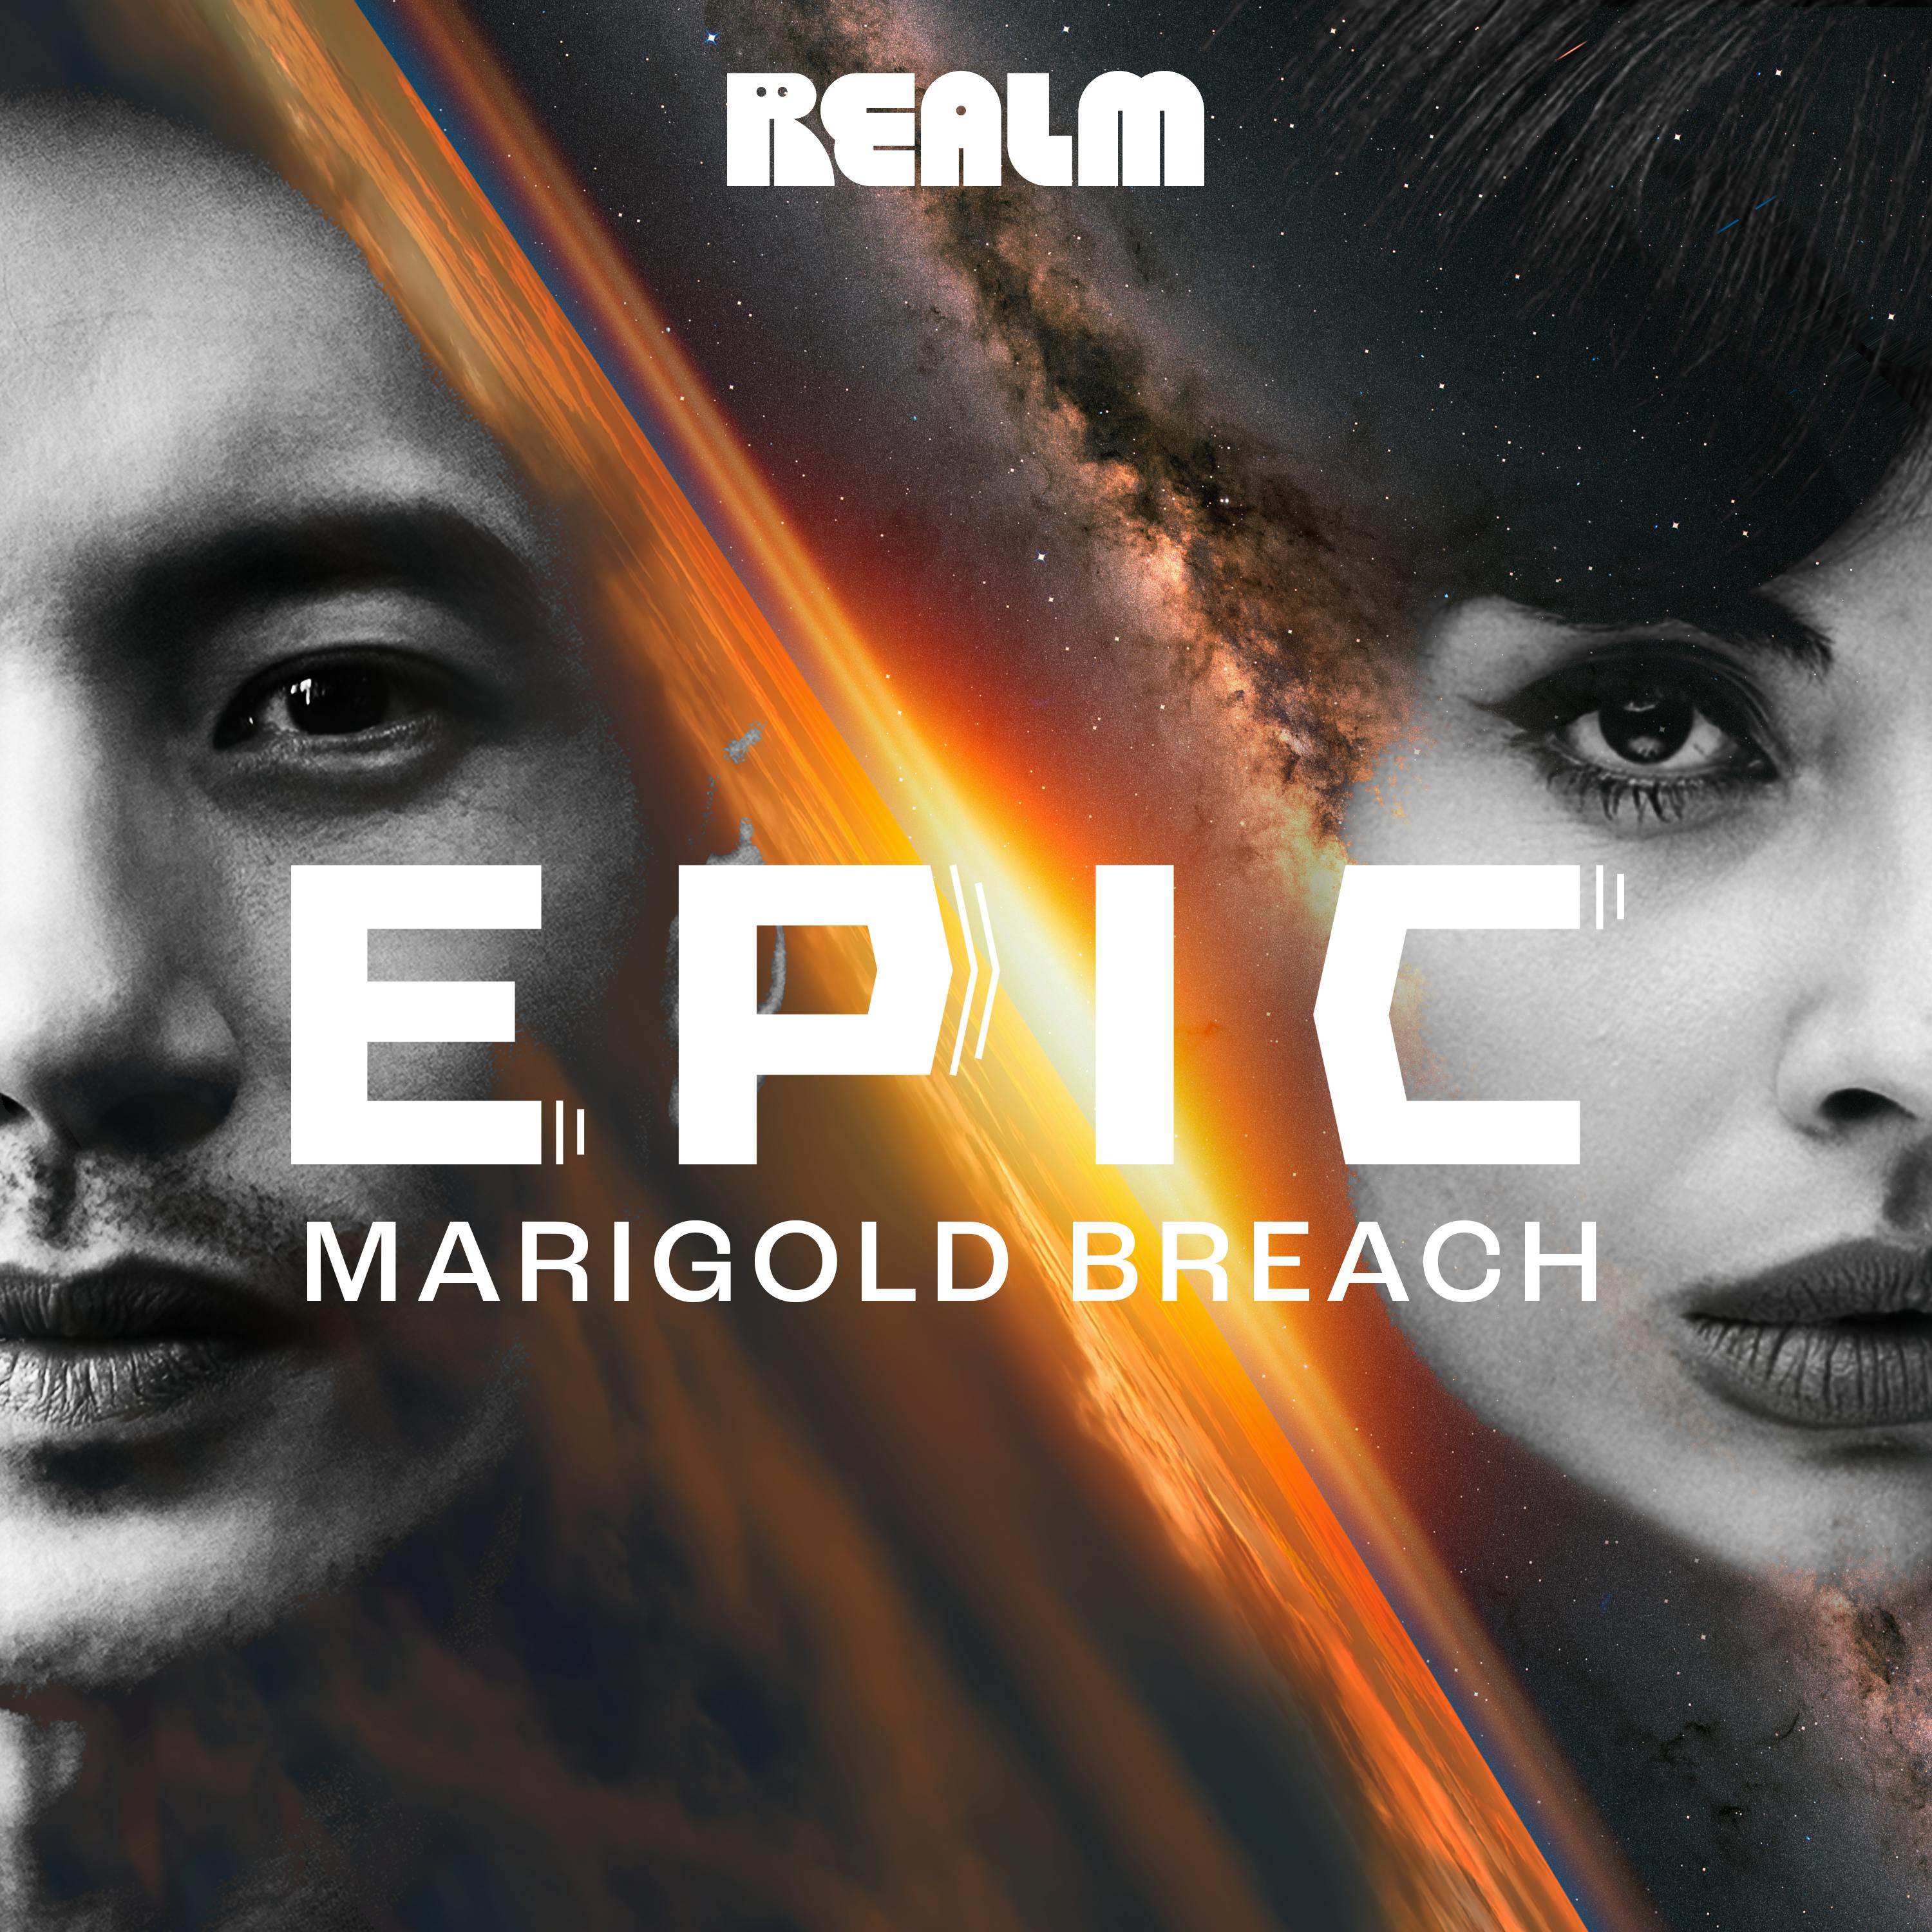 Introducing Epic: Marigold Breach, starring Jameela Jamil and Manny Jacinto